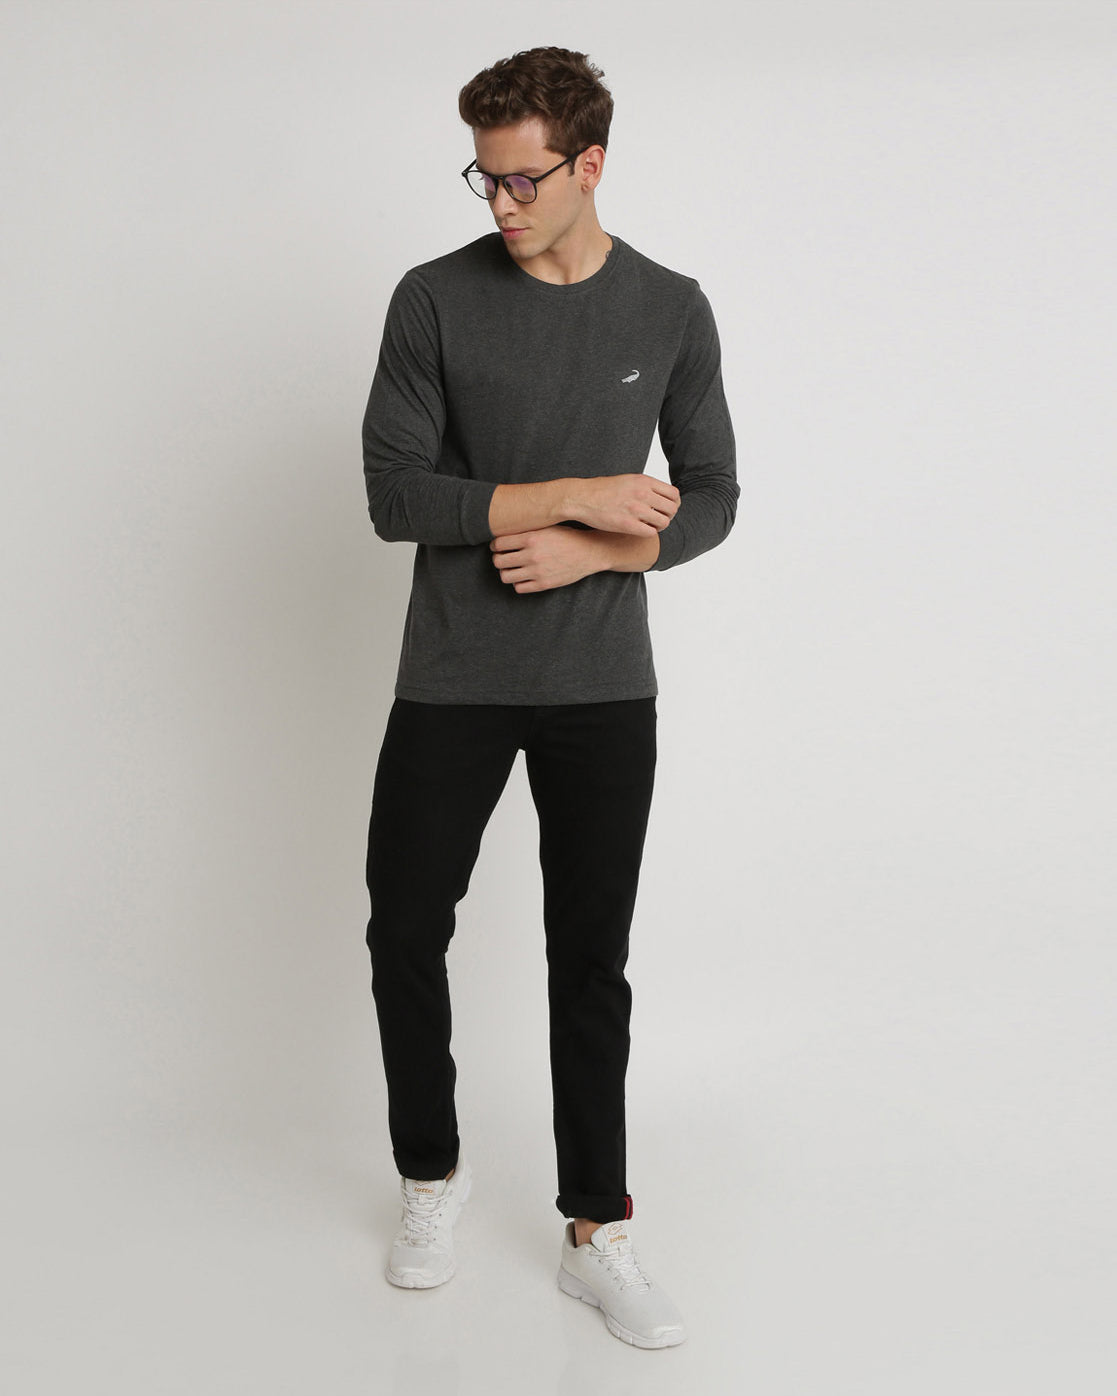 Men's Solid Round Neck Full Sleeve Cotton T-Shirt - CHARCOAL MELANGE